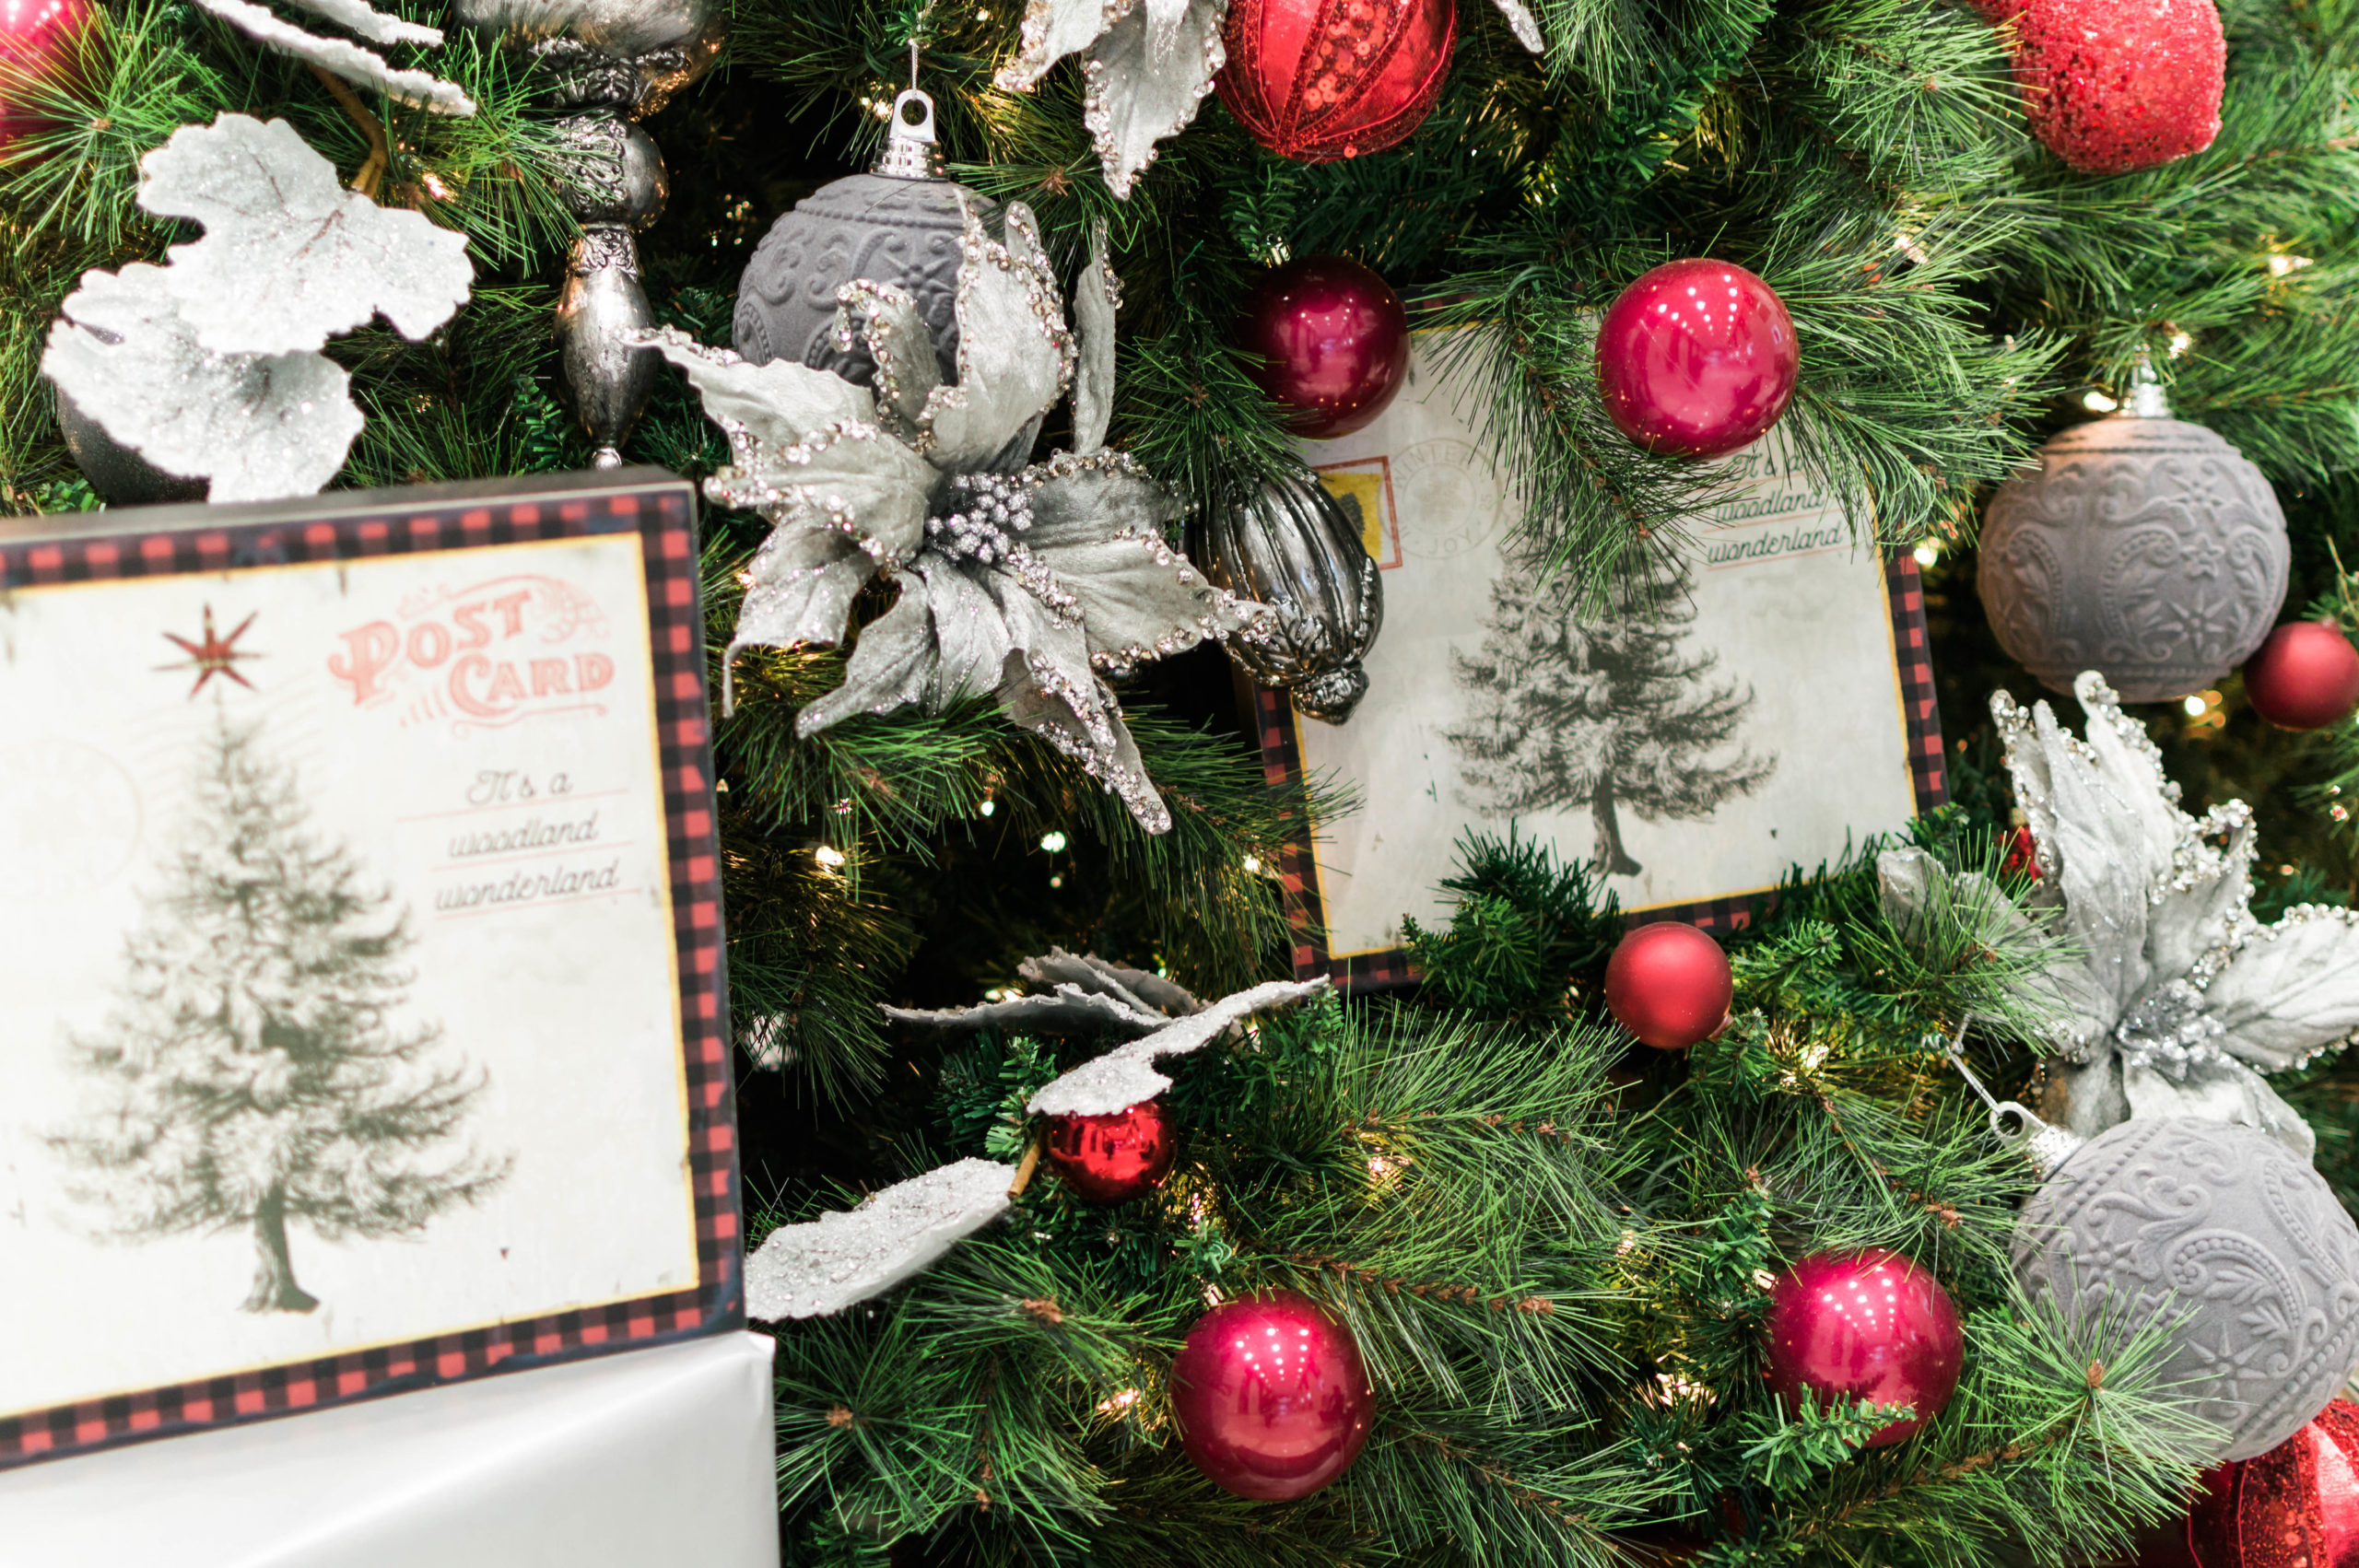 nadinede leon holiday deor - holidat decorating - order Christmas decorations - DIY holiday decorations